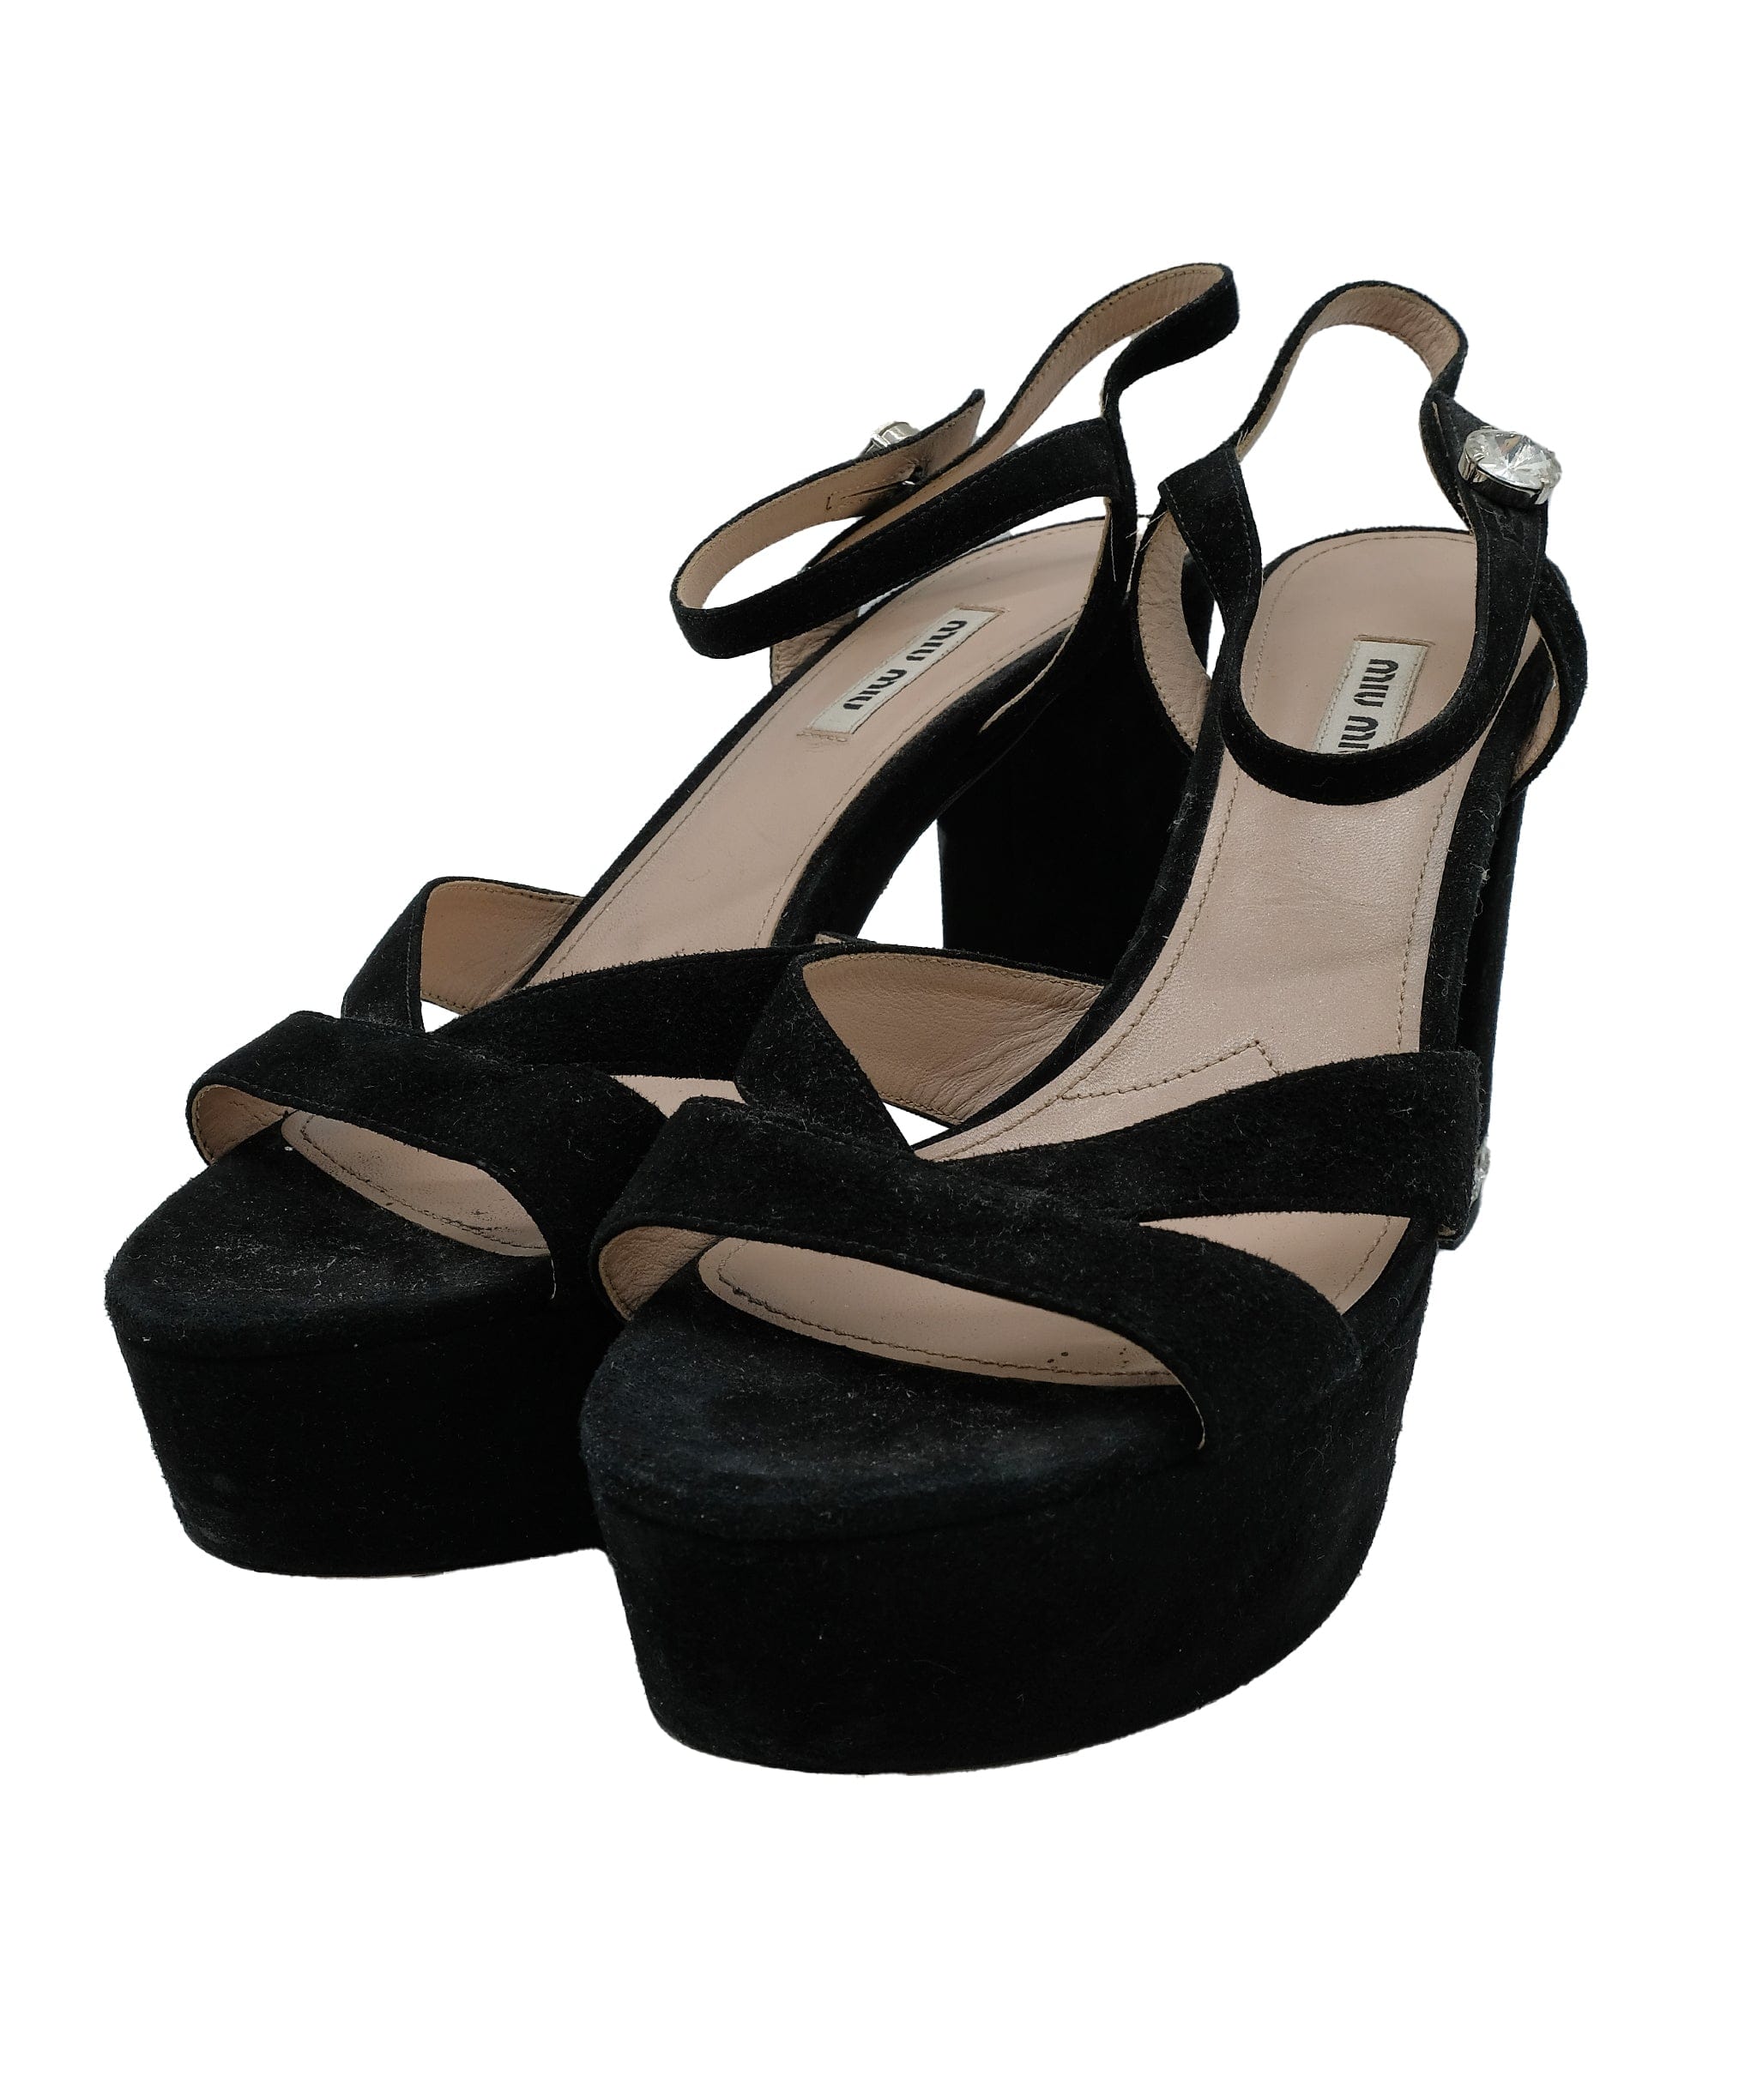 Miumiu Miu Miu Suede Flatform Sandals w/ Crystal Embellished Black Size 40 RJC2892